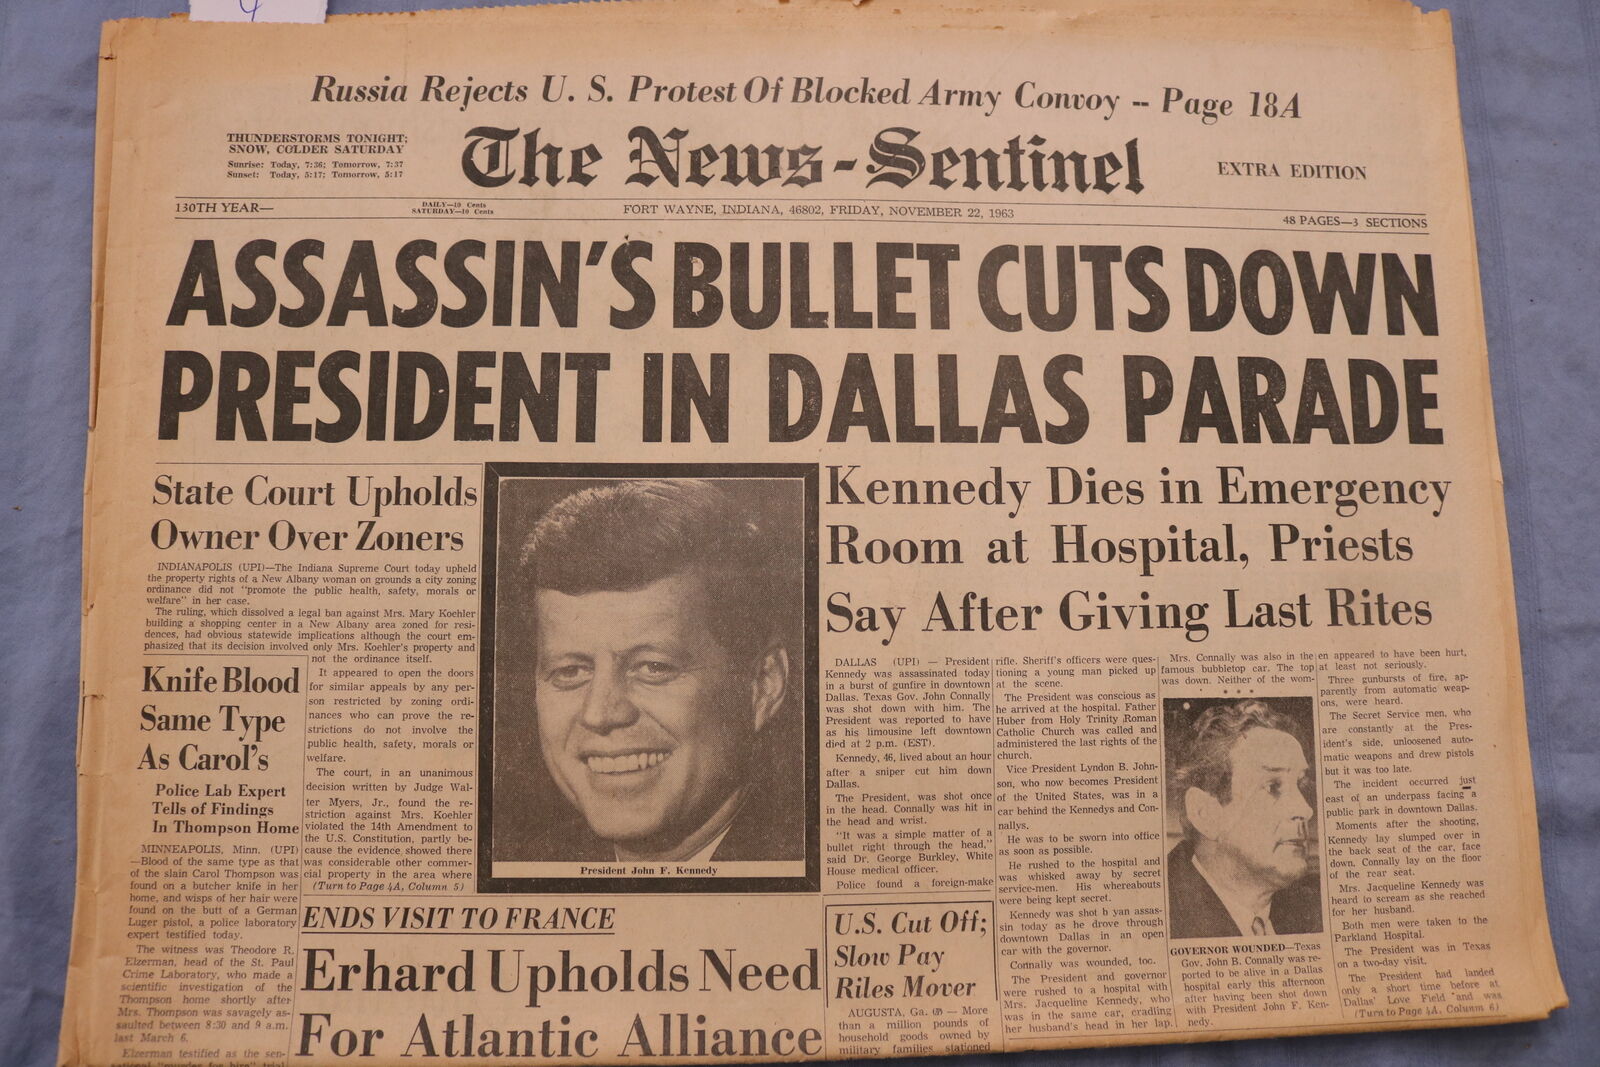 1963 NOV 22 THE NEWS-SENTINEL - ASSASSIN'S BULLET CUTS DOWN PRESIDENT- NP 8547